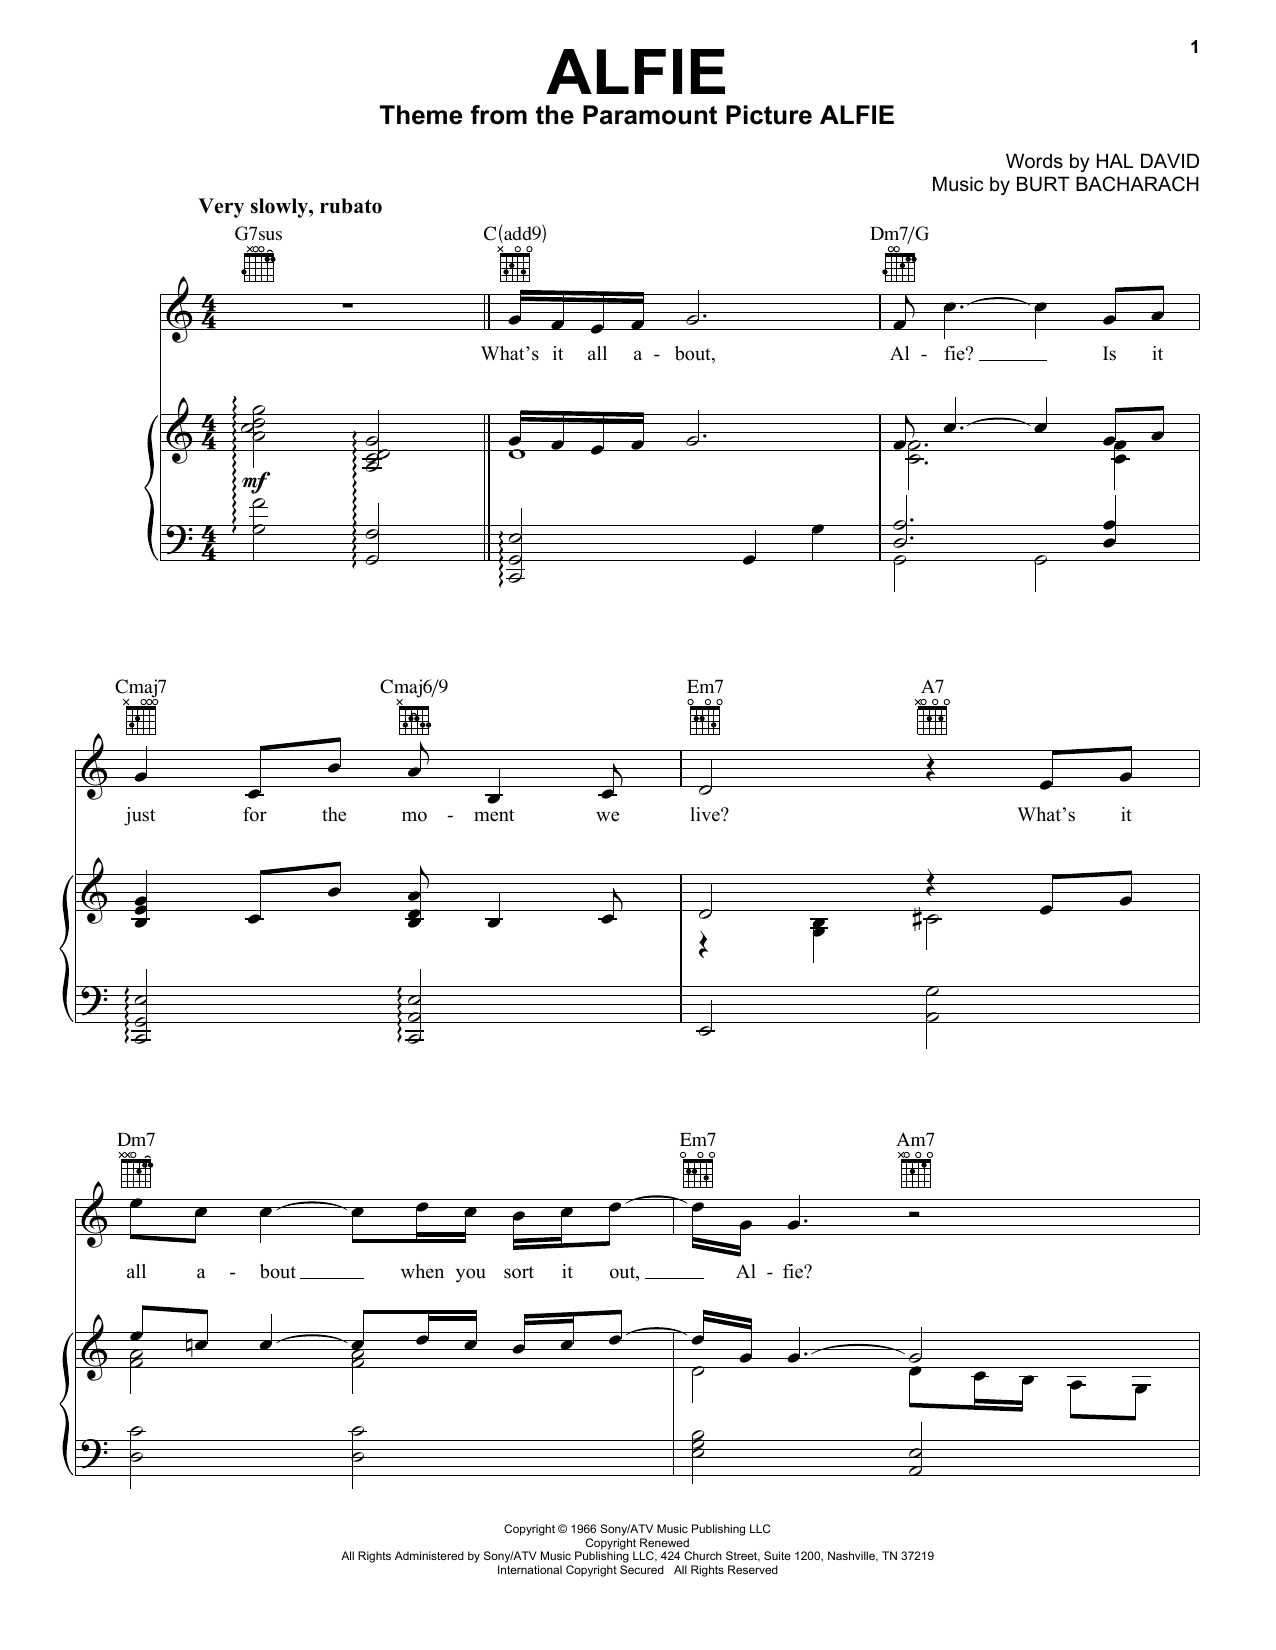 Bacharach & David Alfie Sheet Music Notes & Chords for Real Book - Melody, Lyrics & Chords - C Instruments - Download or Print PDF